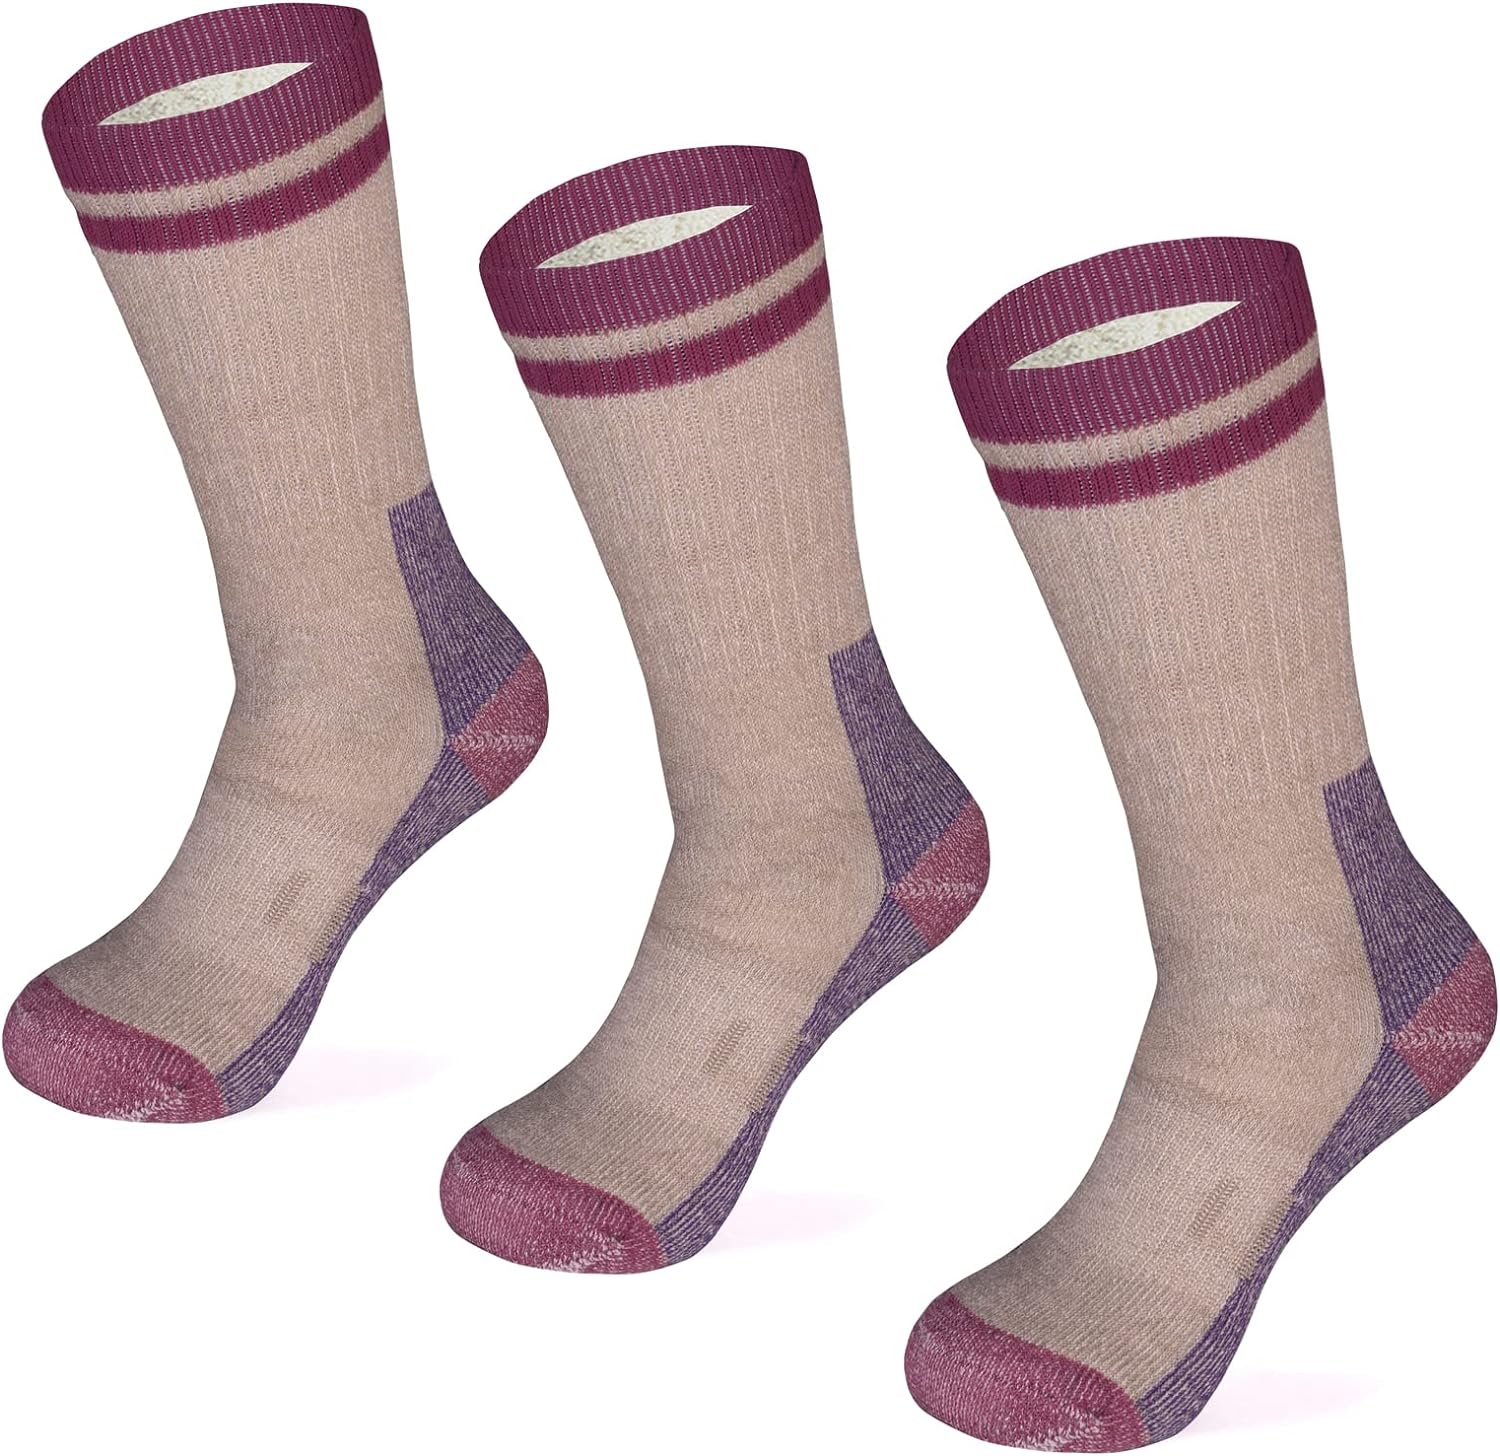  Merino Wool Hiking Socks for Men n Women - 3 Pairs